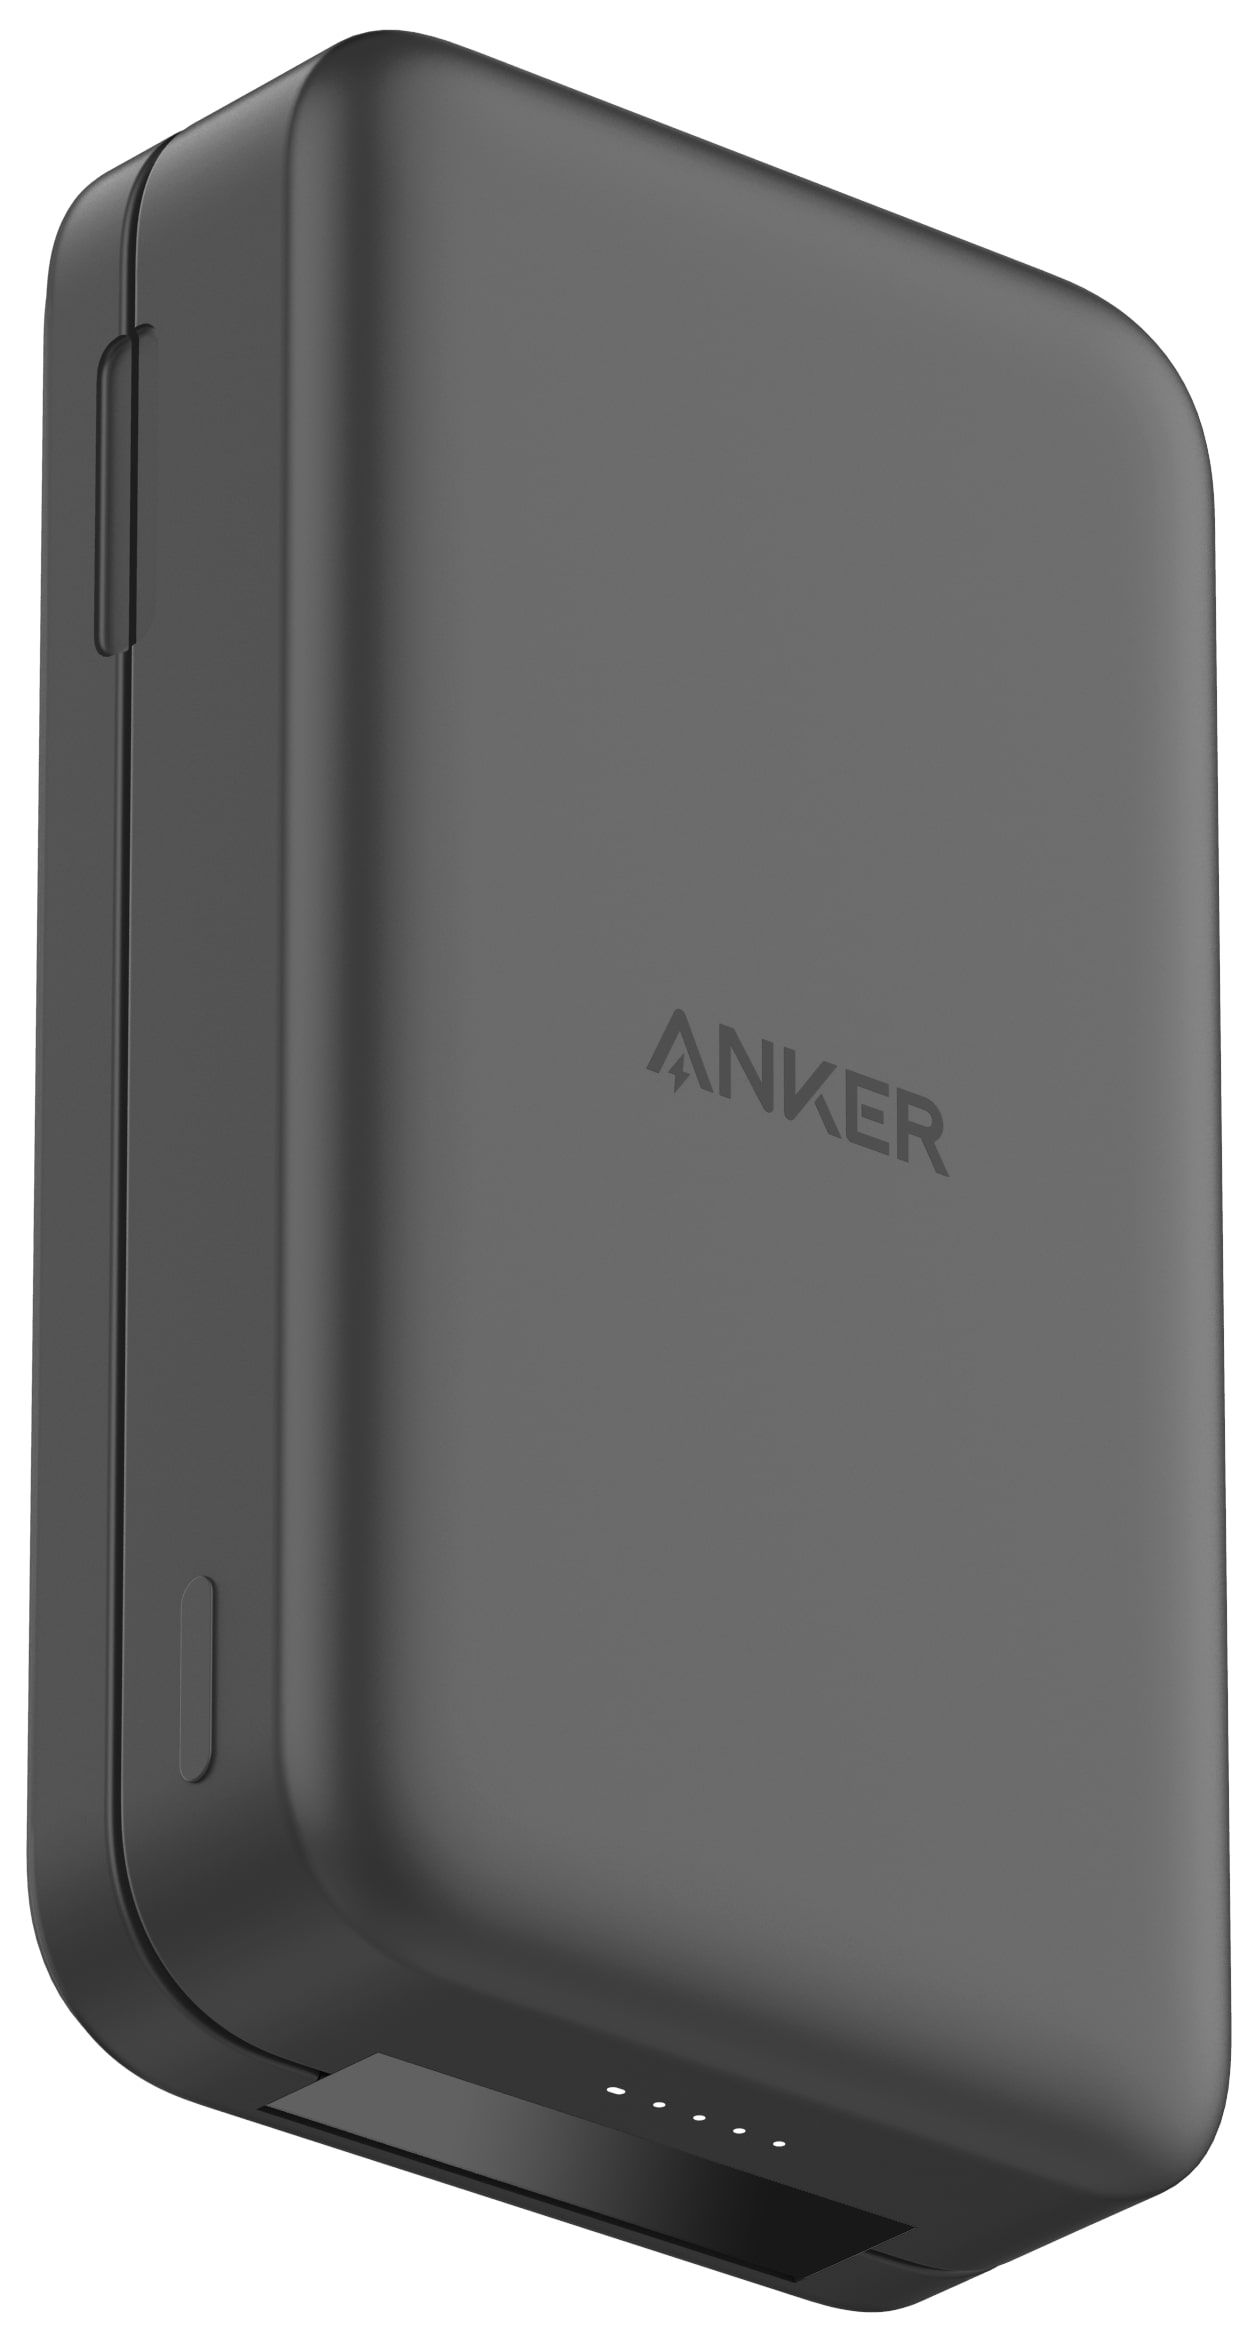 New Anker MagGo power banks add Qi2 charging